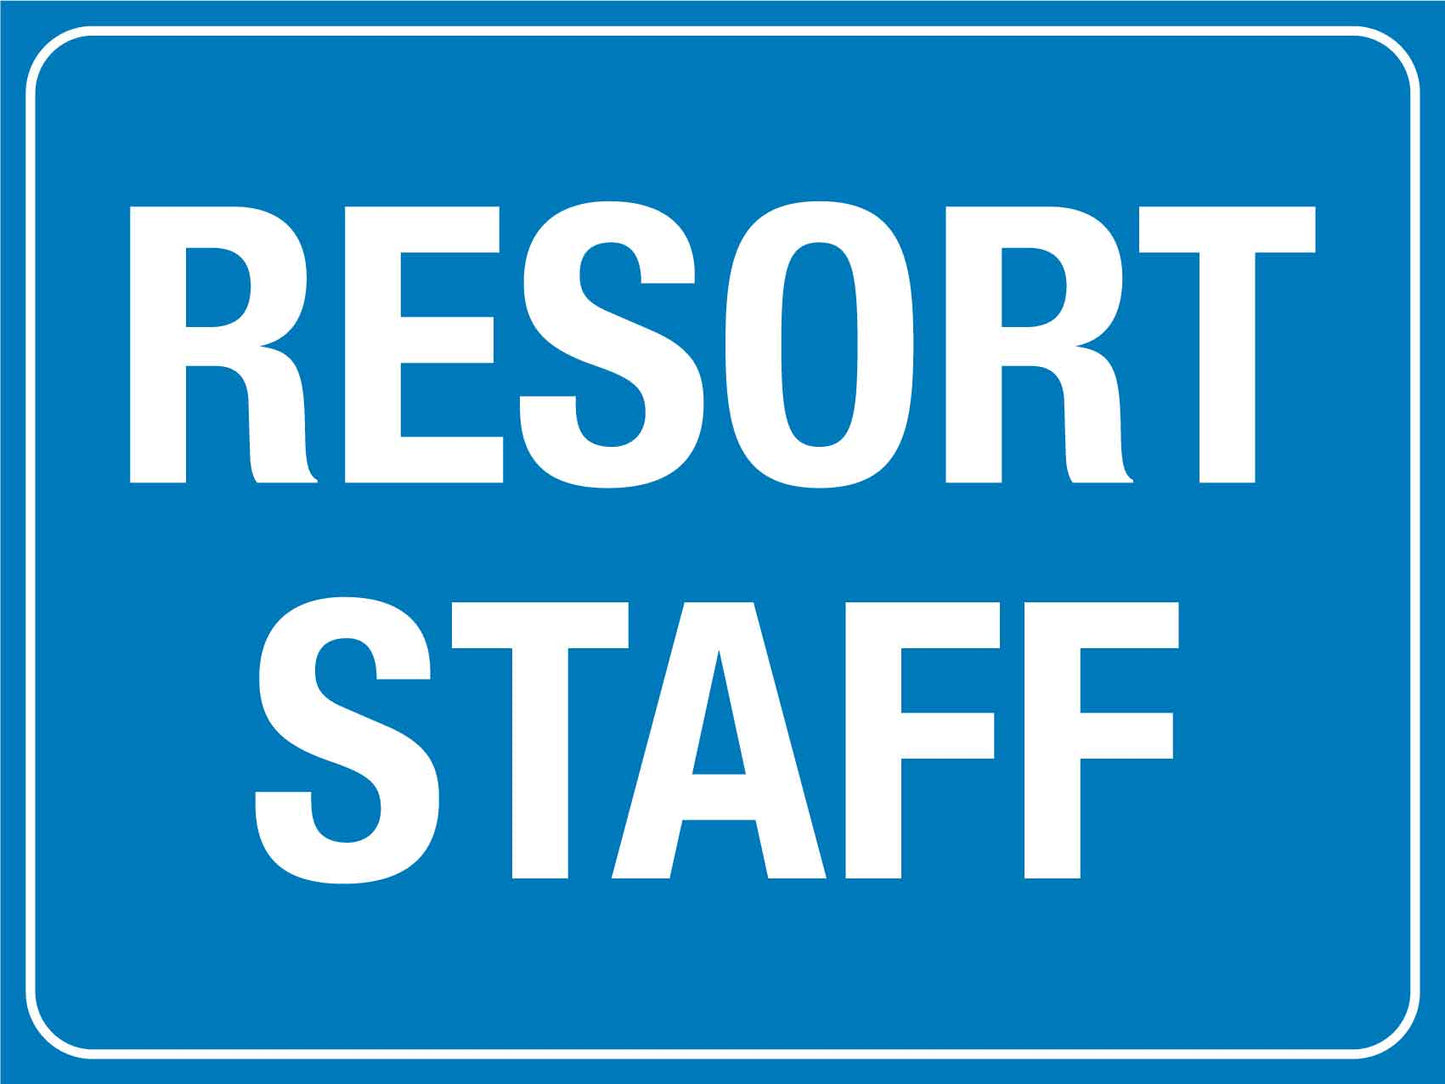 Resort Staff Sign